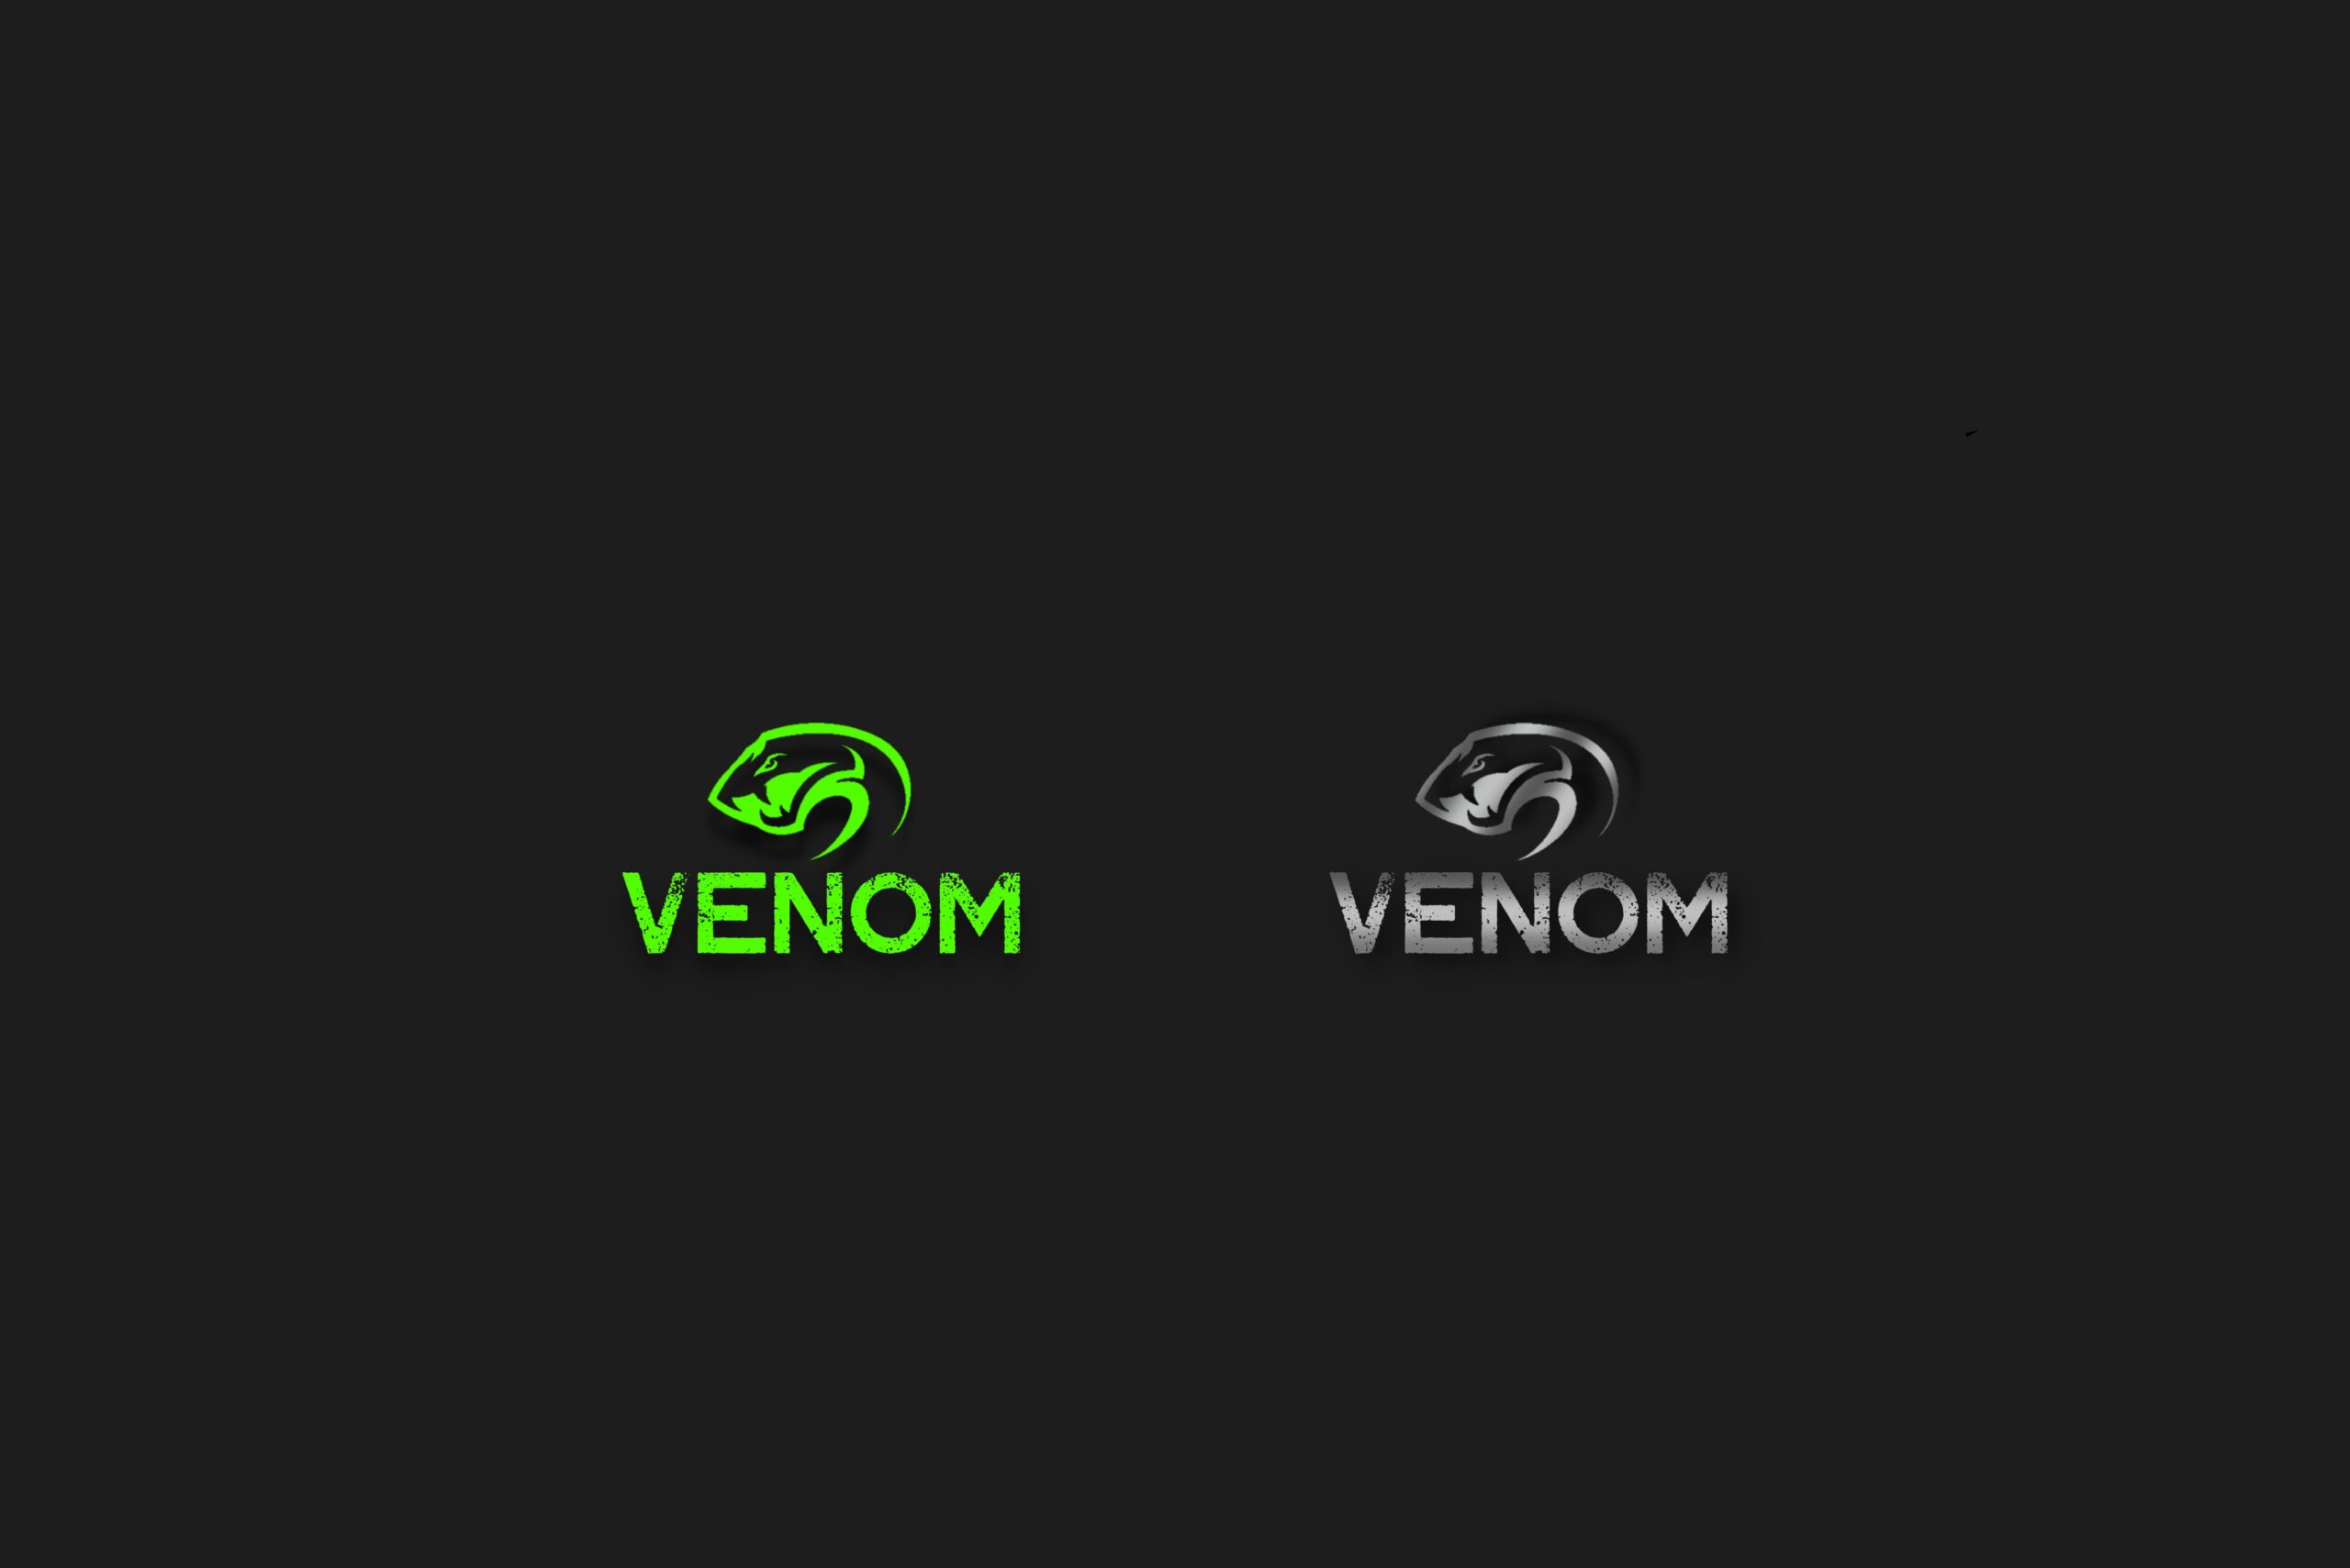 Ford Venom - logo concepts 3